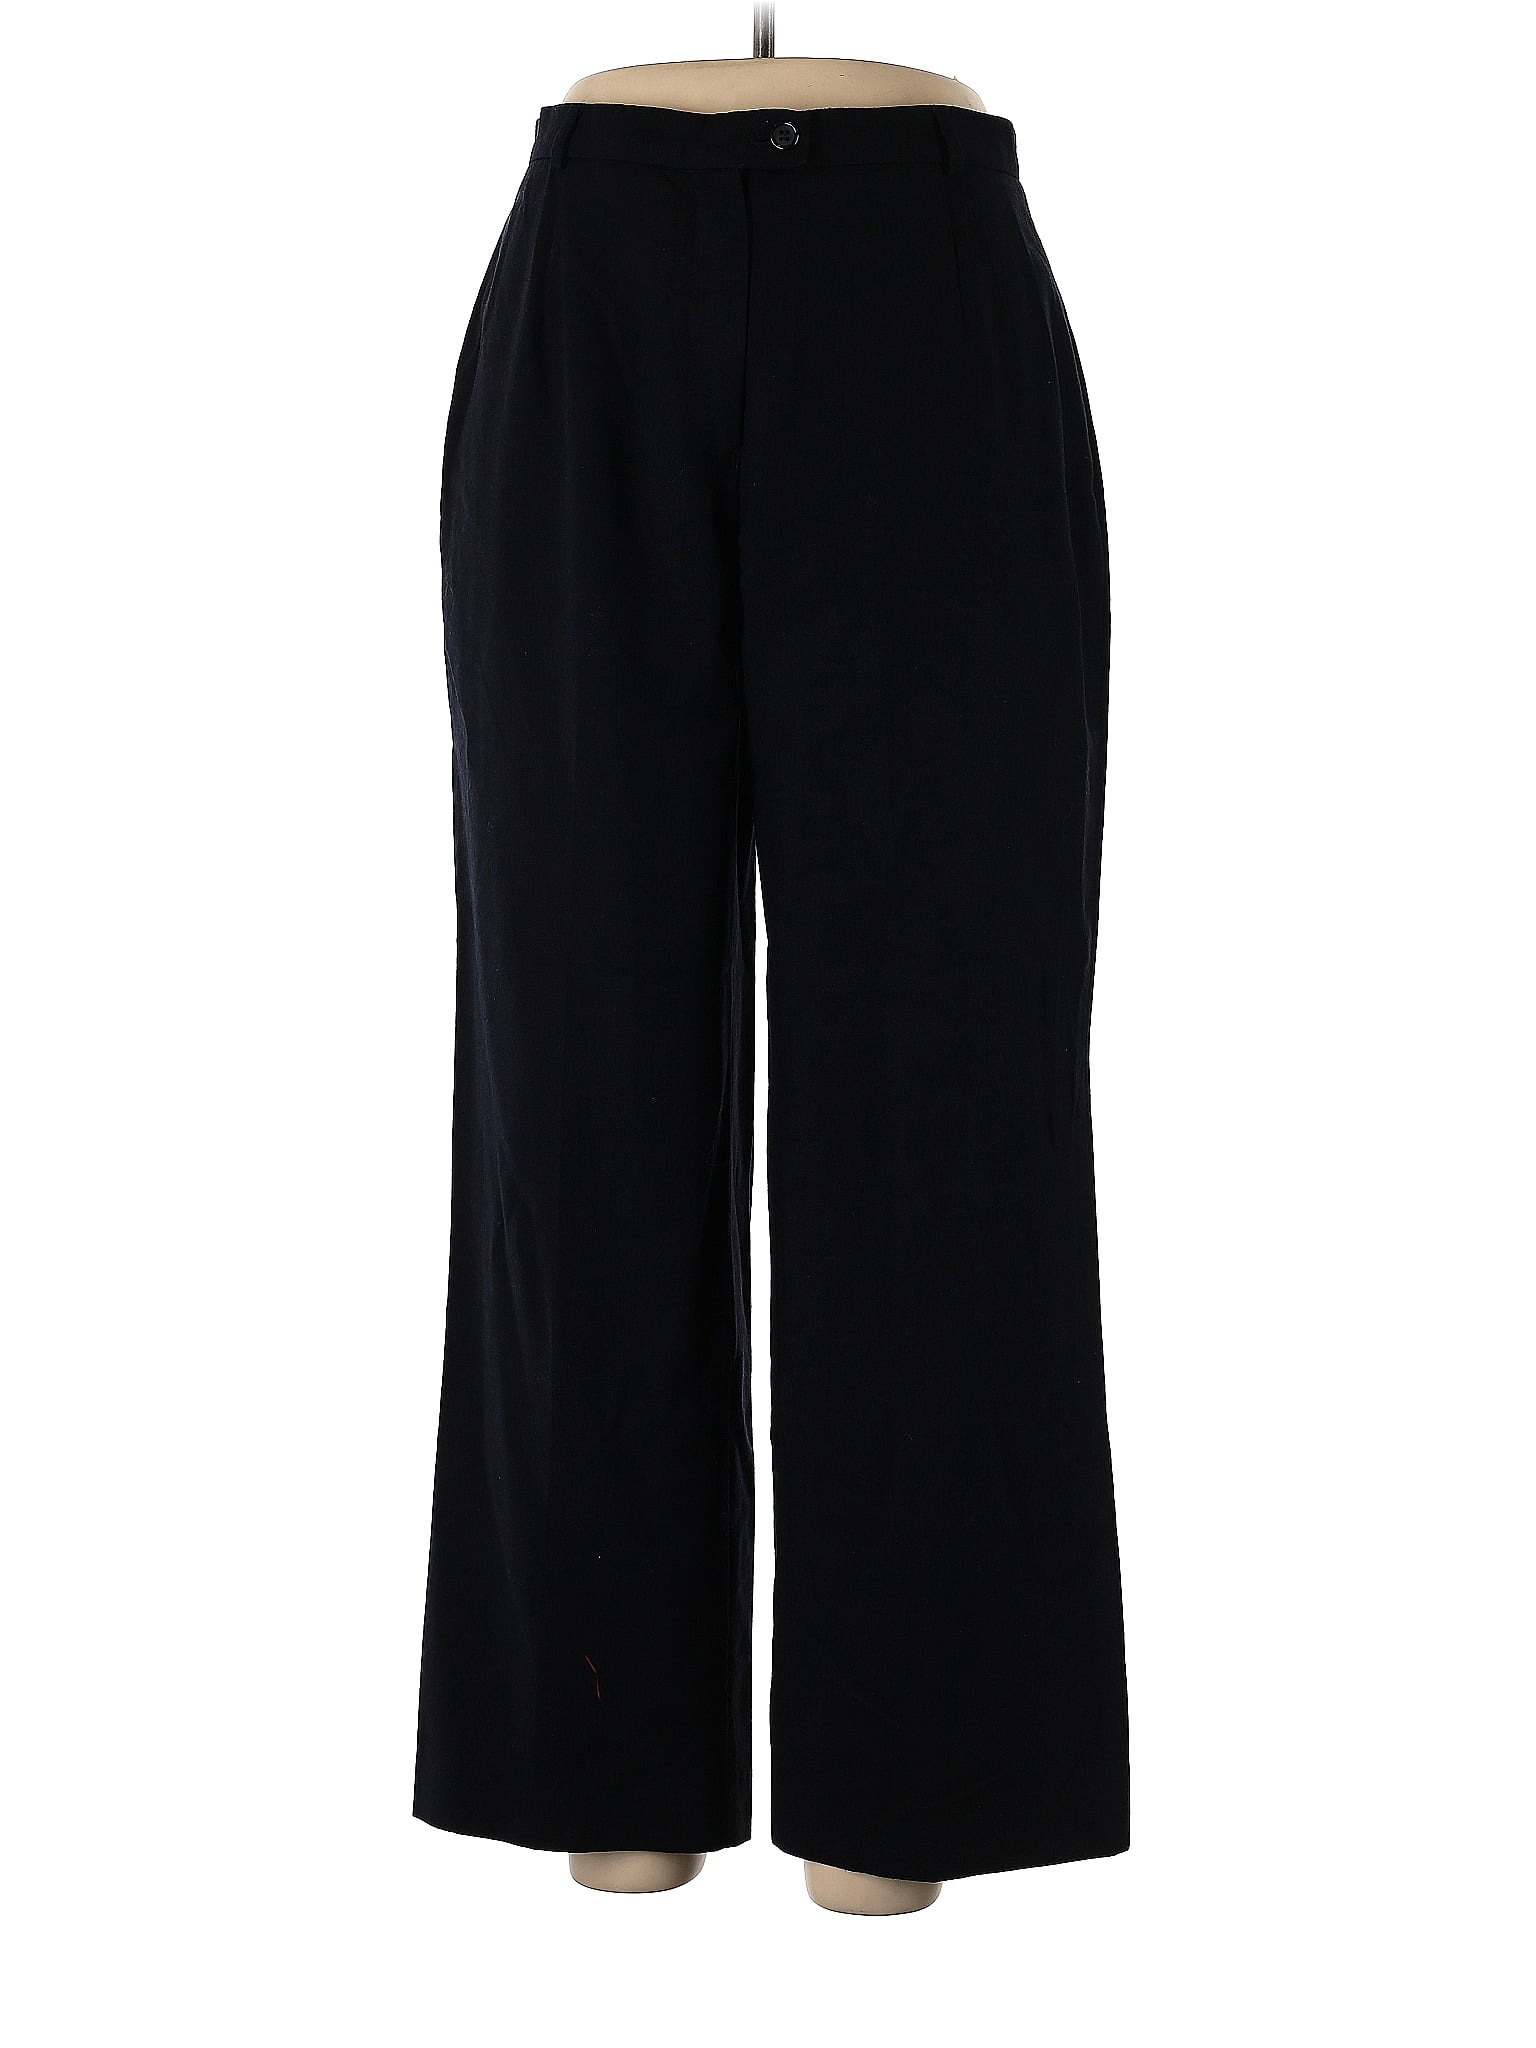 Burberry Solid Black Dress Pants Size 14 - 75% off | ThredUp